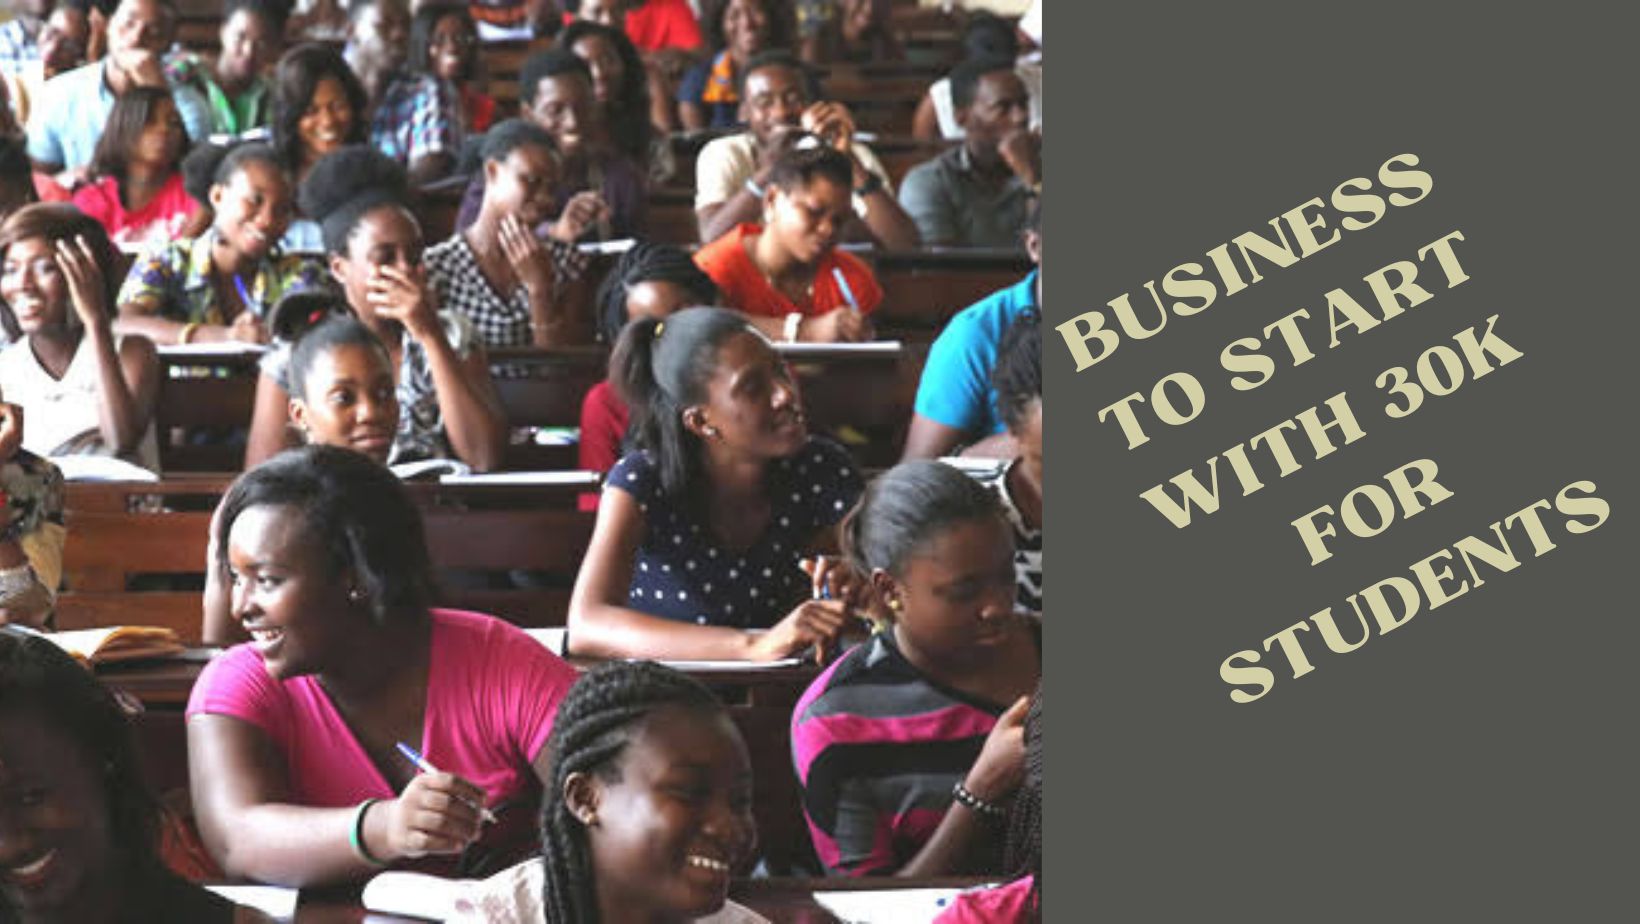 Business for nigerian students entrepreneur